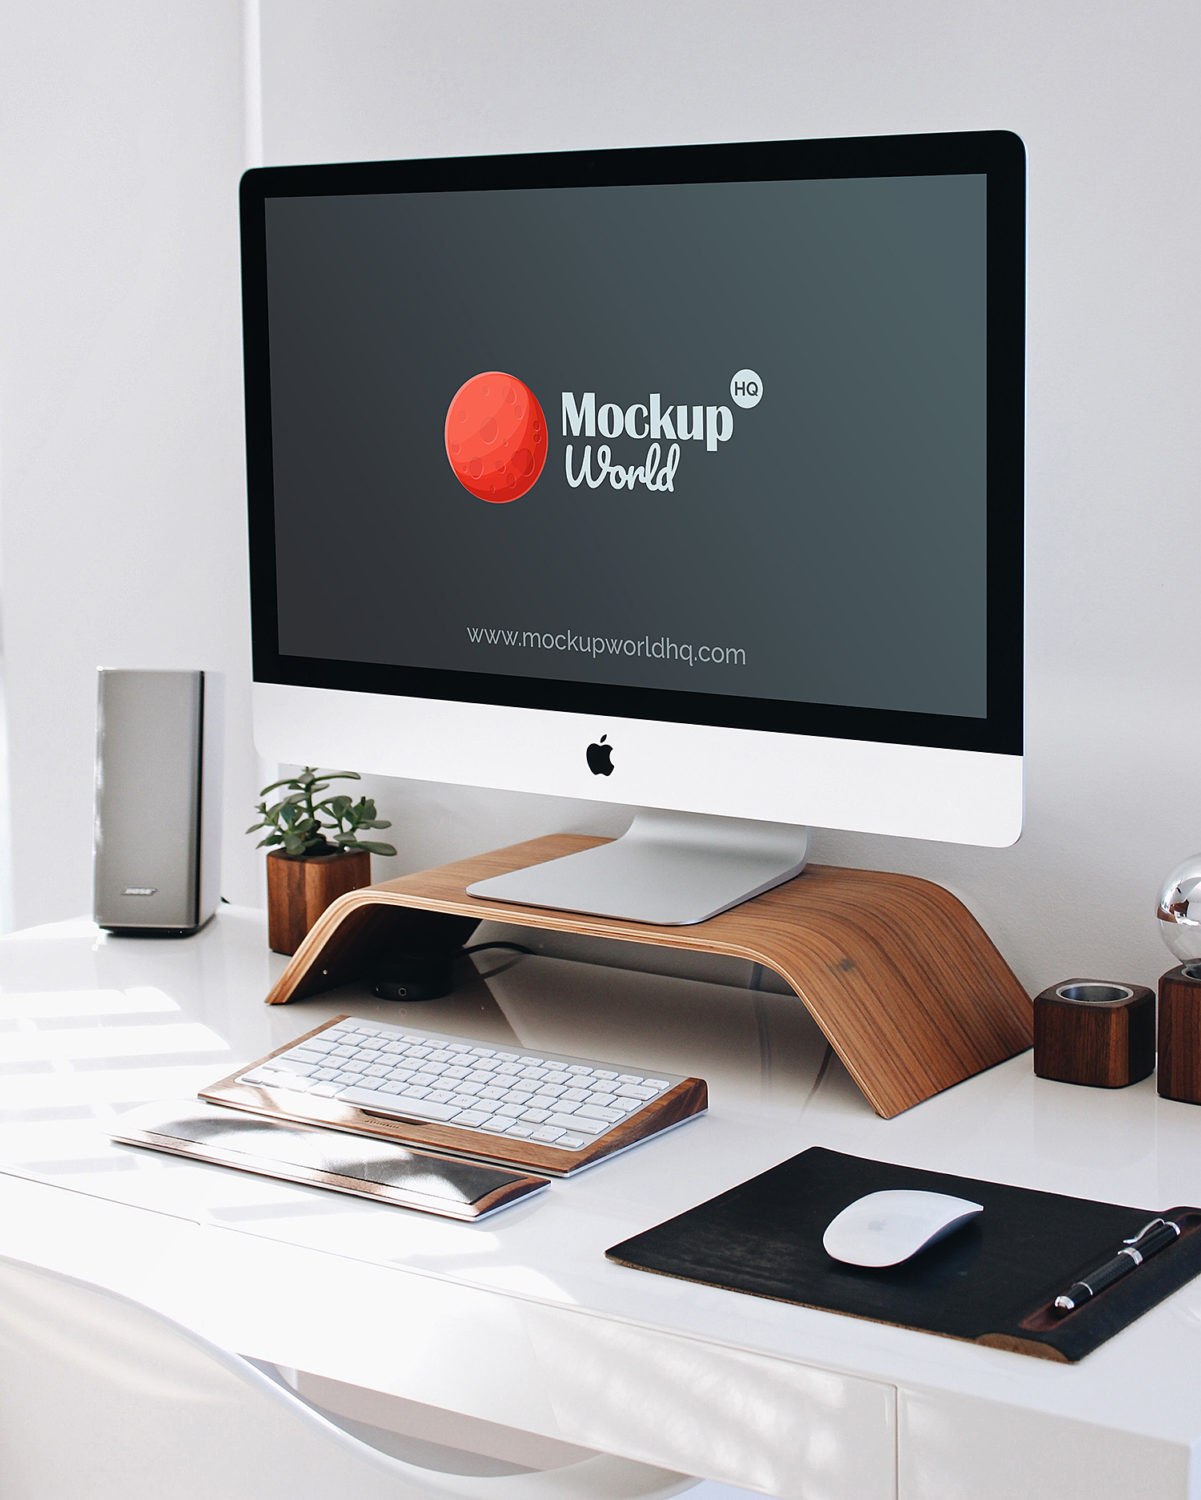 iMac Workspace Mockup PSD Free